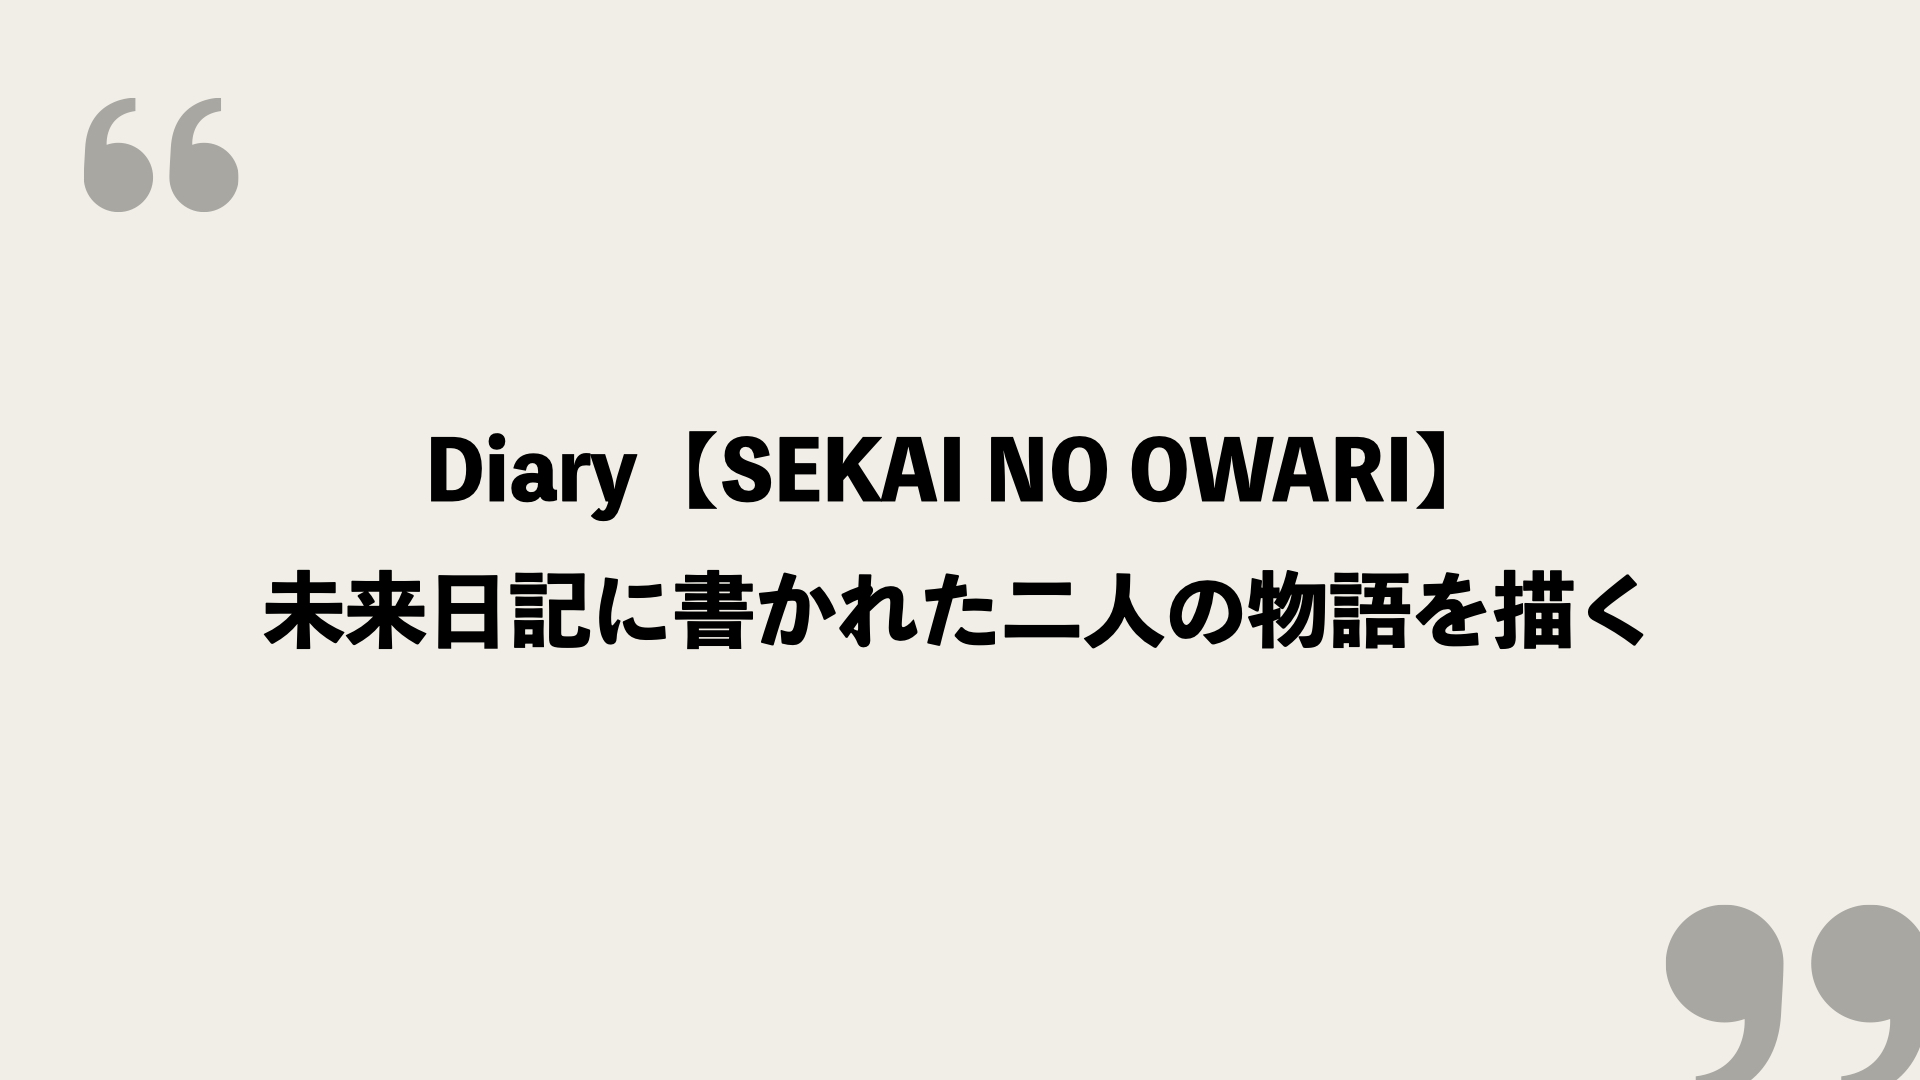 Diary Sekai No Owari 歌詞の意味を考察 未来日記に書かれた二人の物語を描く Framu Media